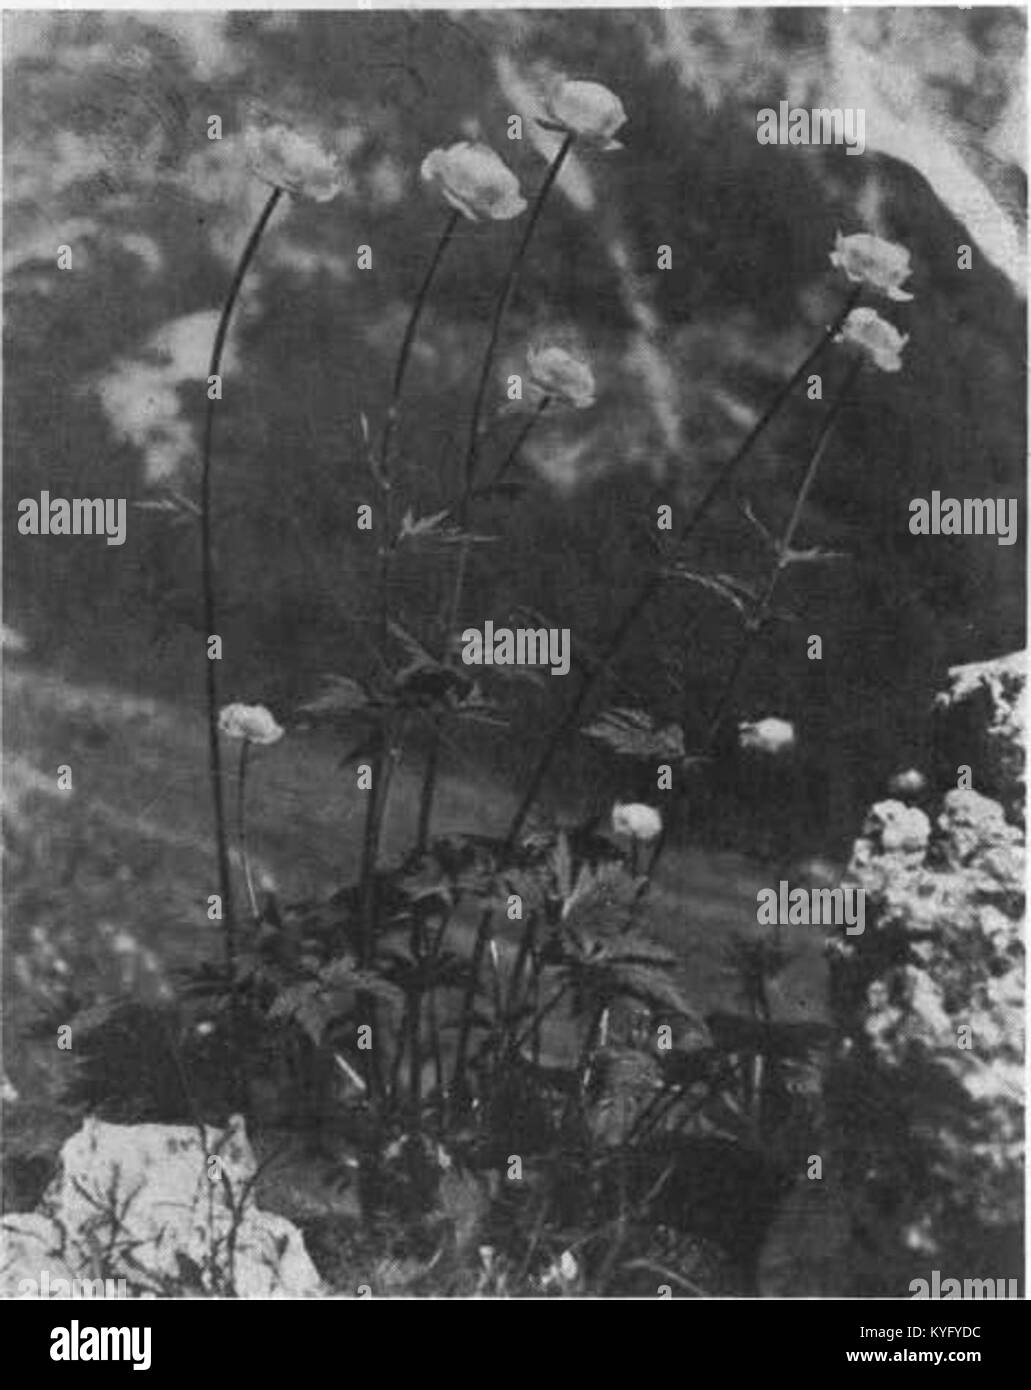 Pogačica ali kraguljčki (Trollius europaeus L.) pod domom Frischaufovim na Okrešlju 1939 Foto Stock